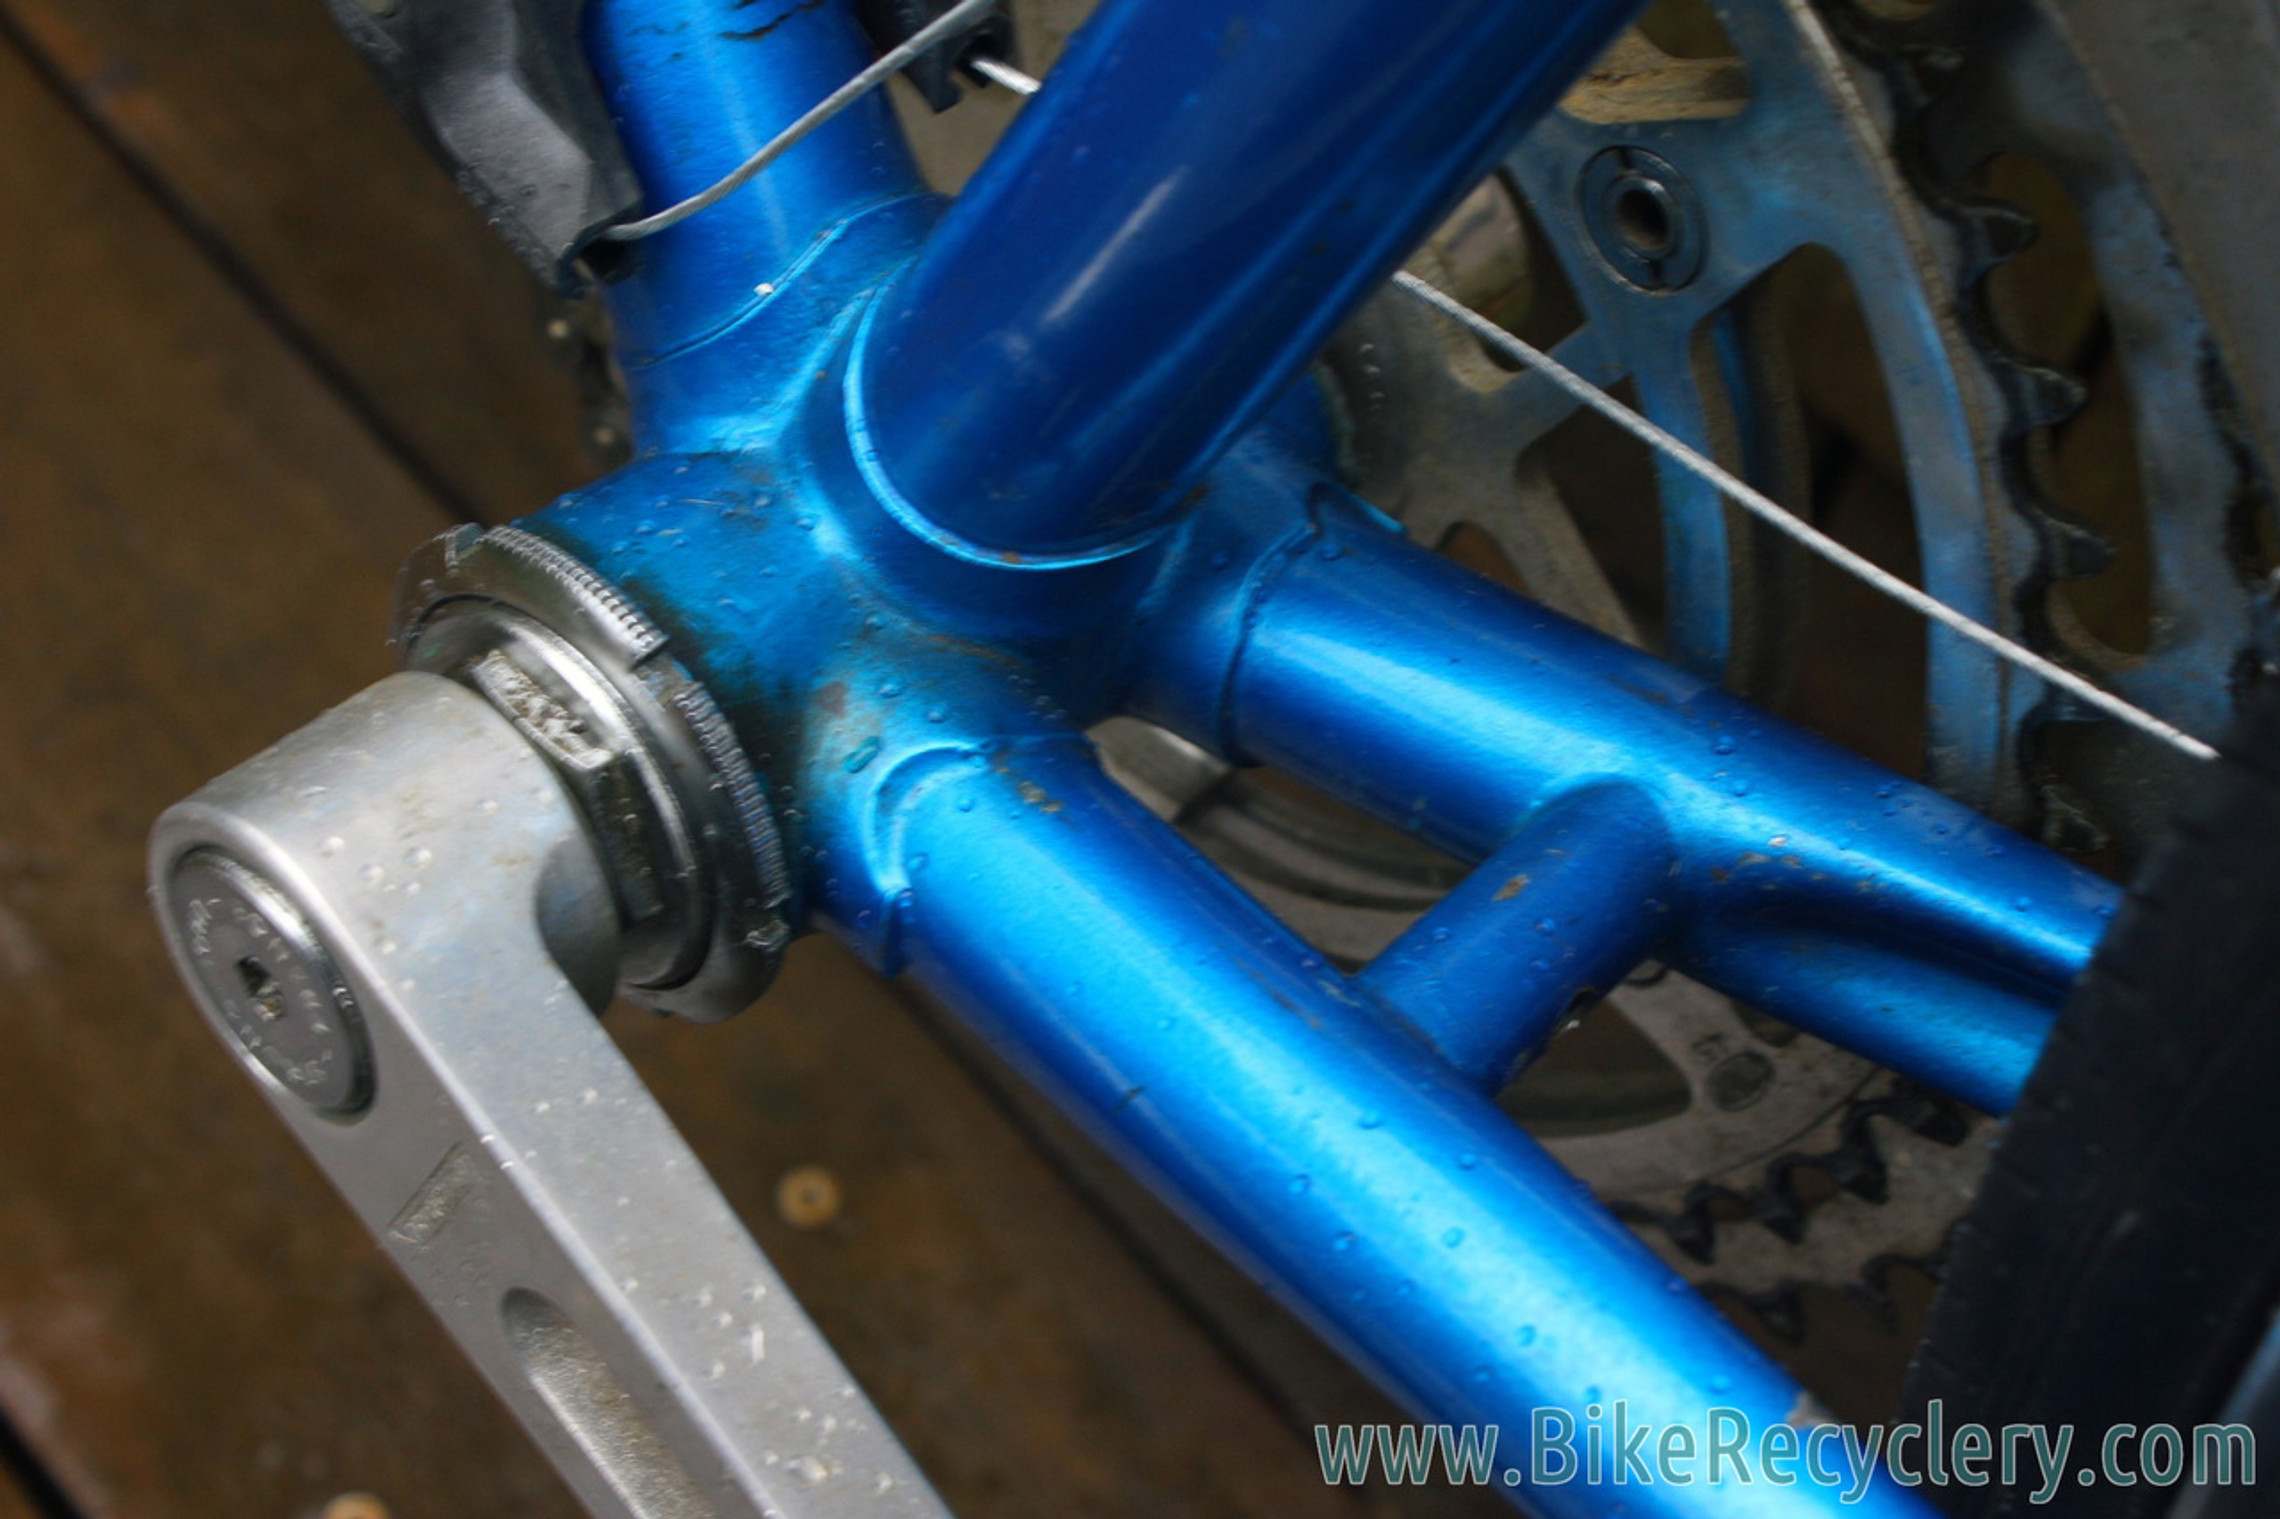 58cm 1972 Peugeot Px 10 Vintage Road Bike All Original Blue Plain Nervex Lugs Original